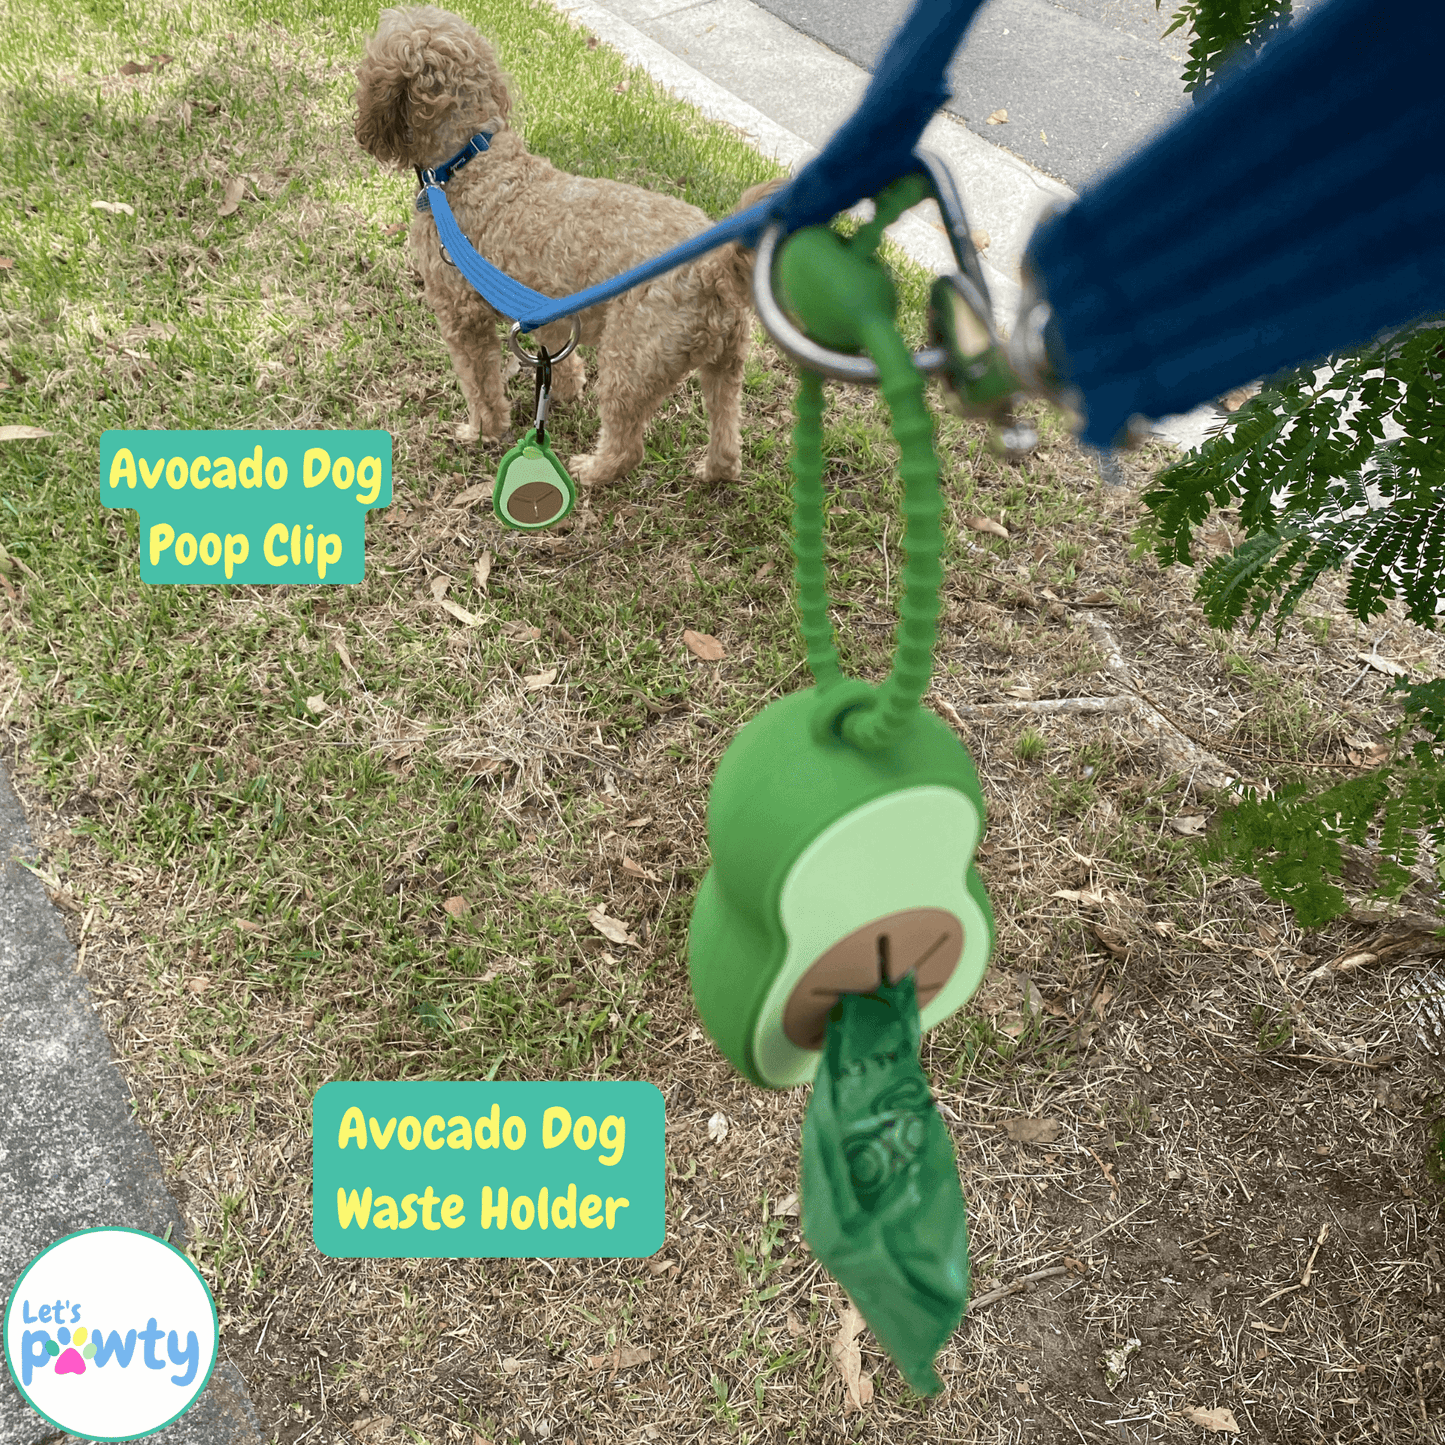 Waste dog poop holders, environmentally friendly poo bags, avocado themed